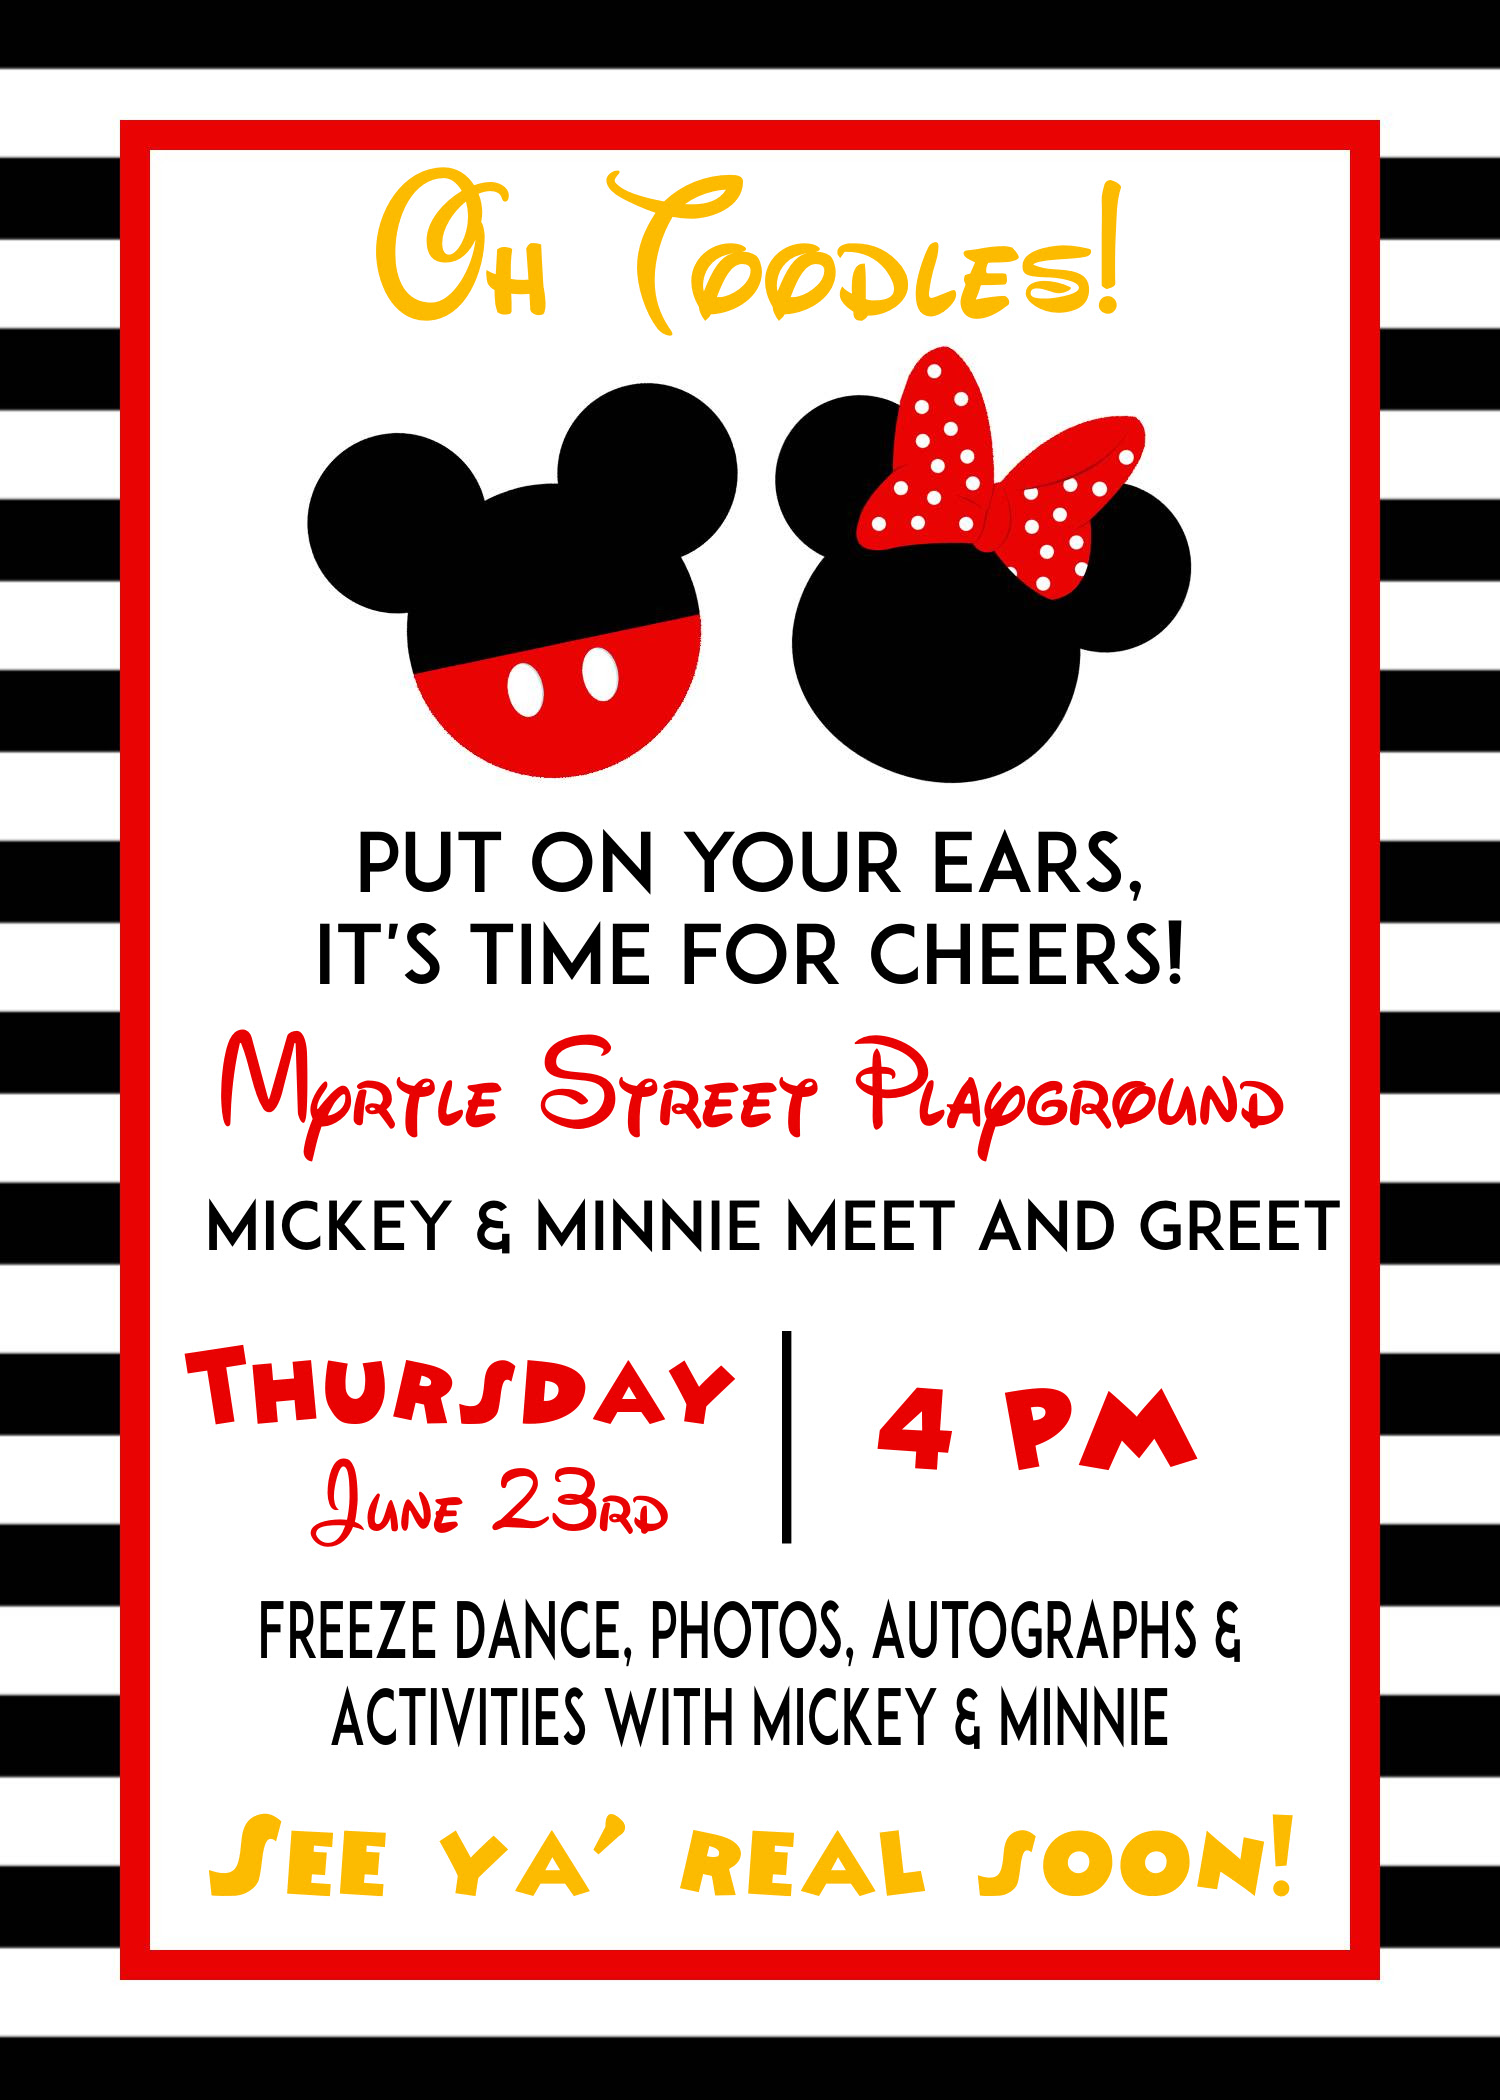 Mickey & Minnie Meet and Greet at Myrtle Street Playground